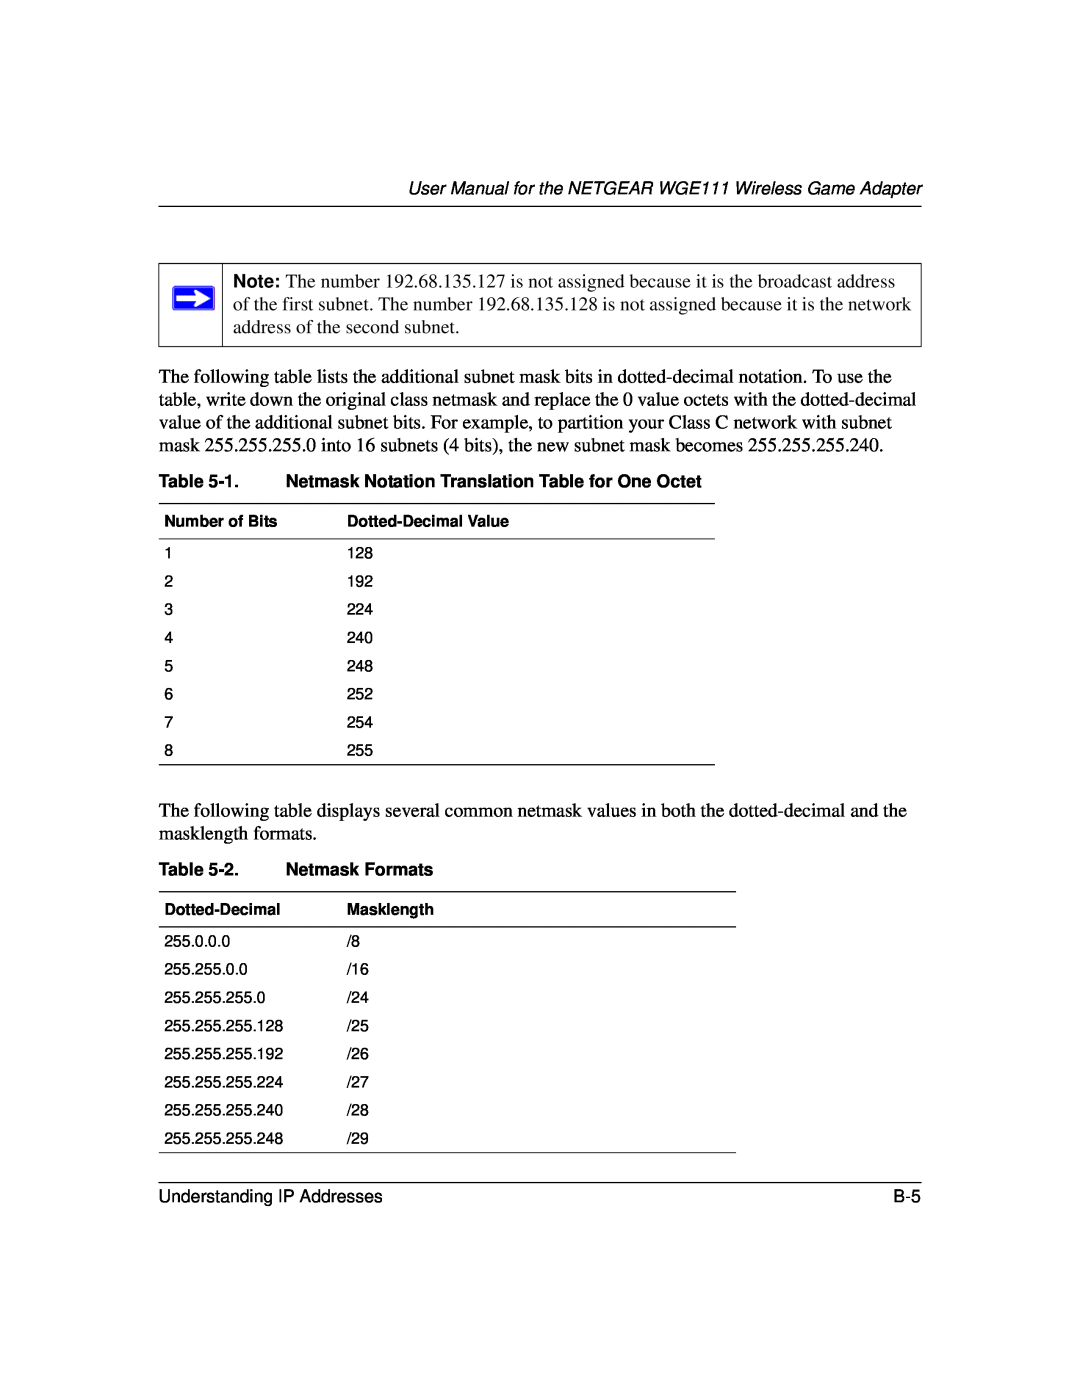 NETGEAR WGE111 user manual 1. Netmask Notation Translation Table for One Octet, 2. Netmask Formats, Number of Bits 